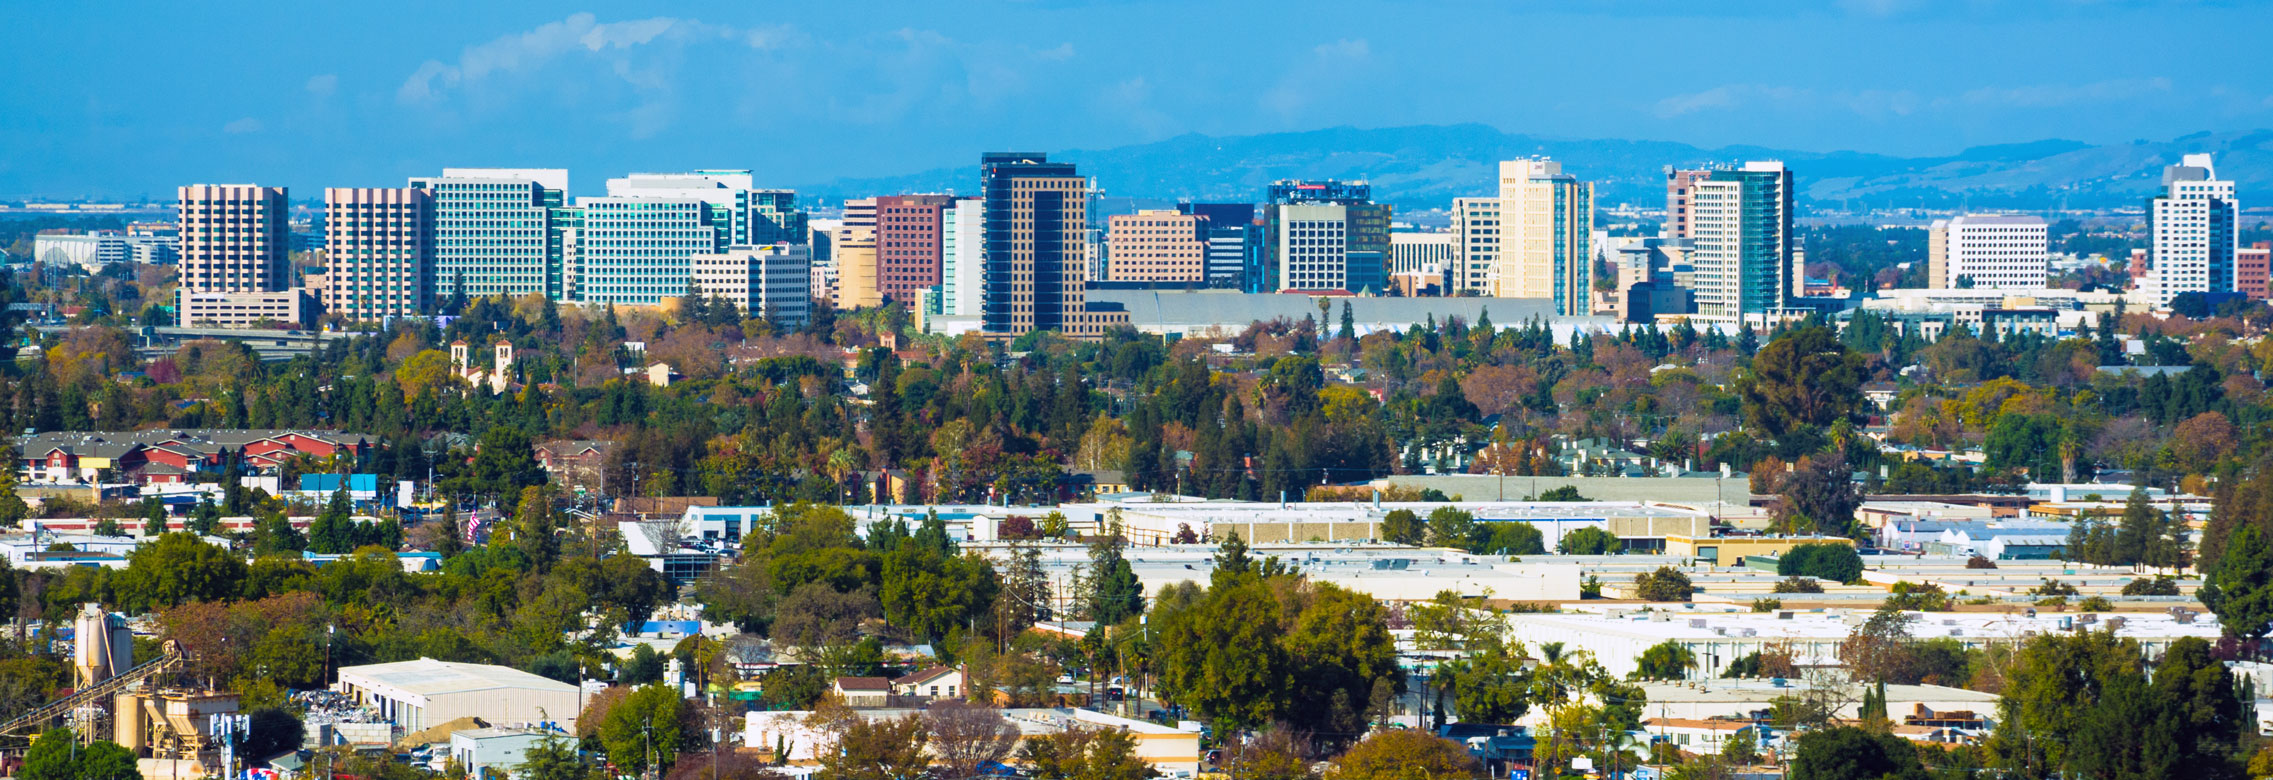 San Jose Skyline Vista, Elevated View